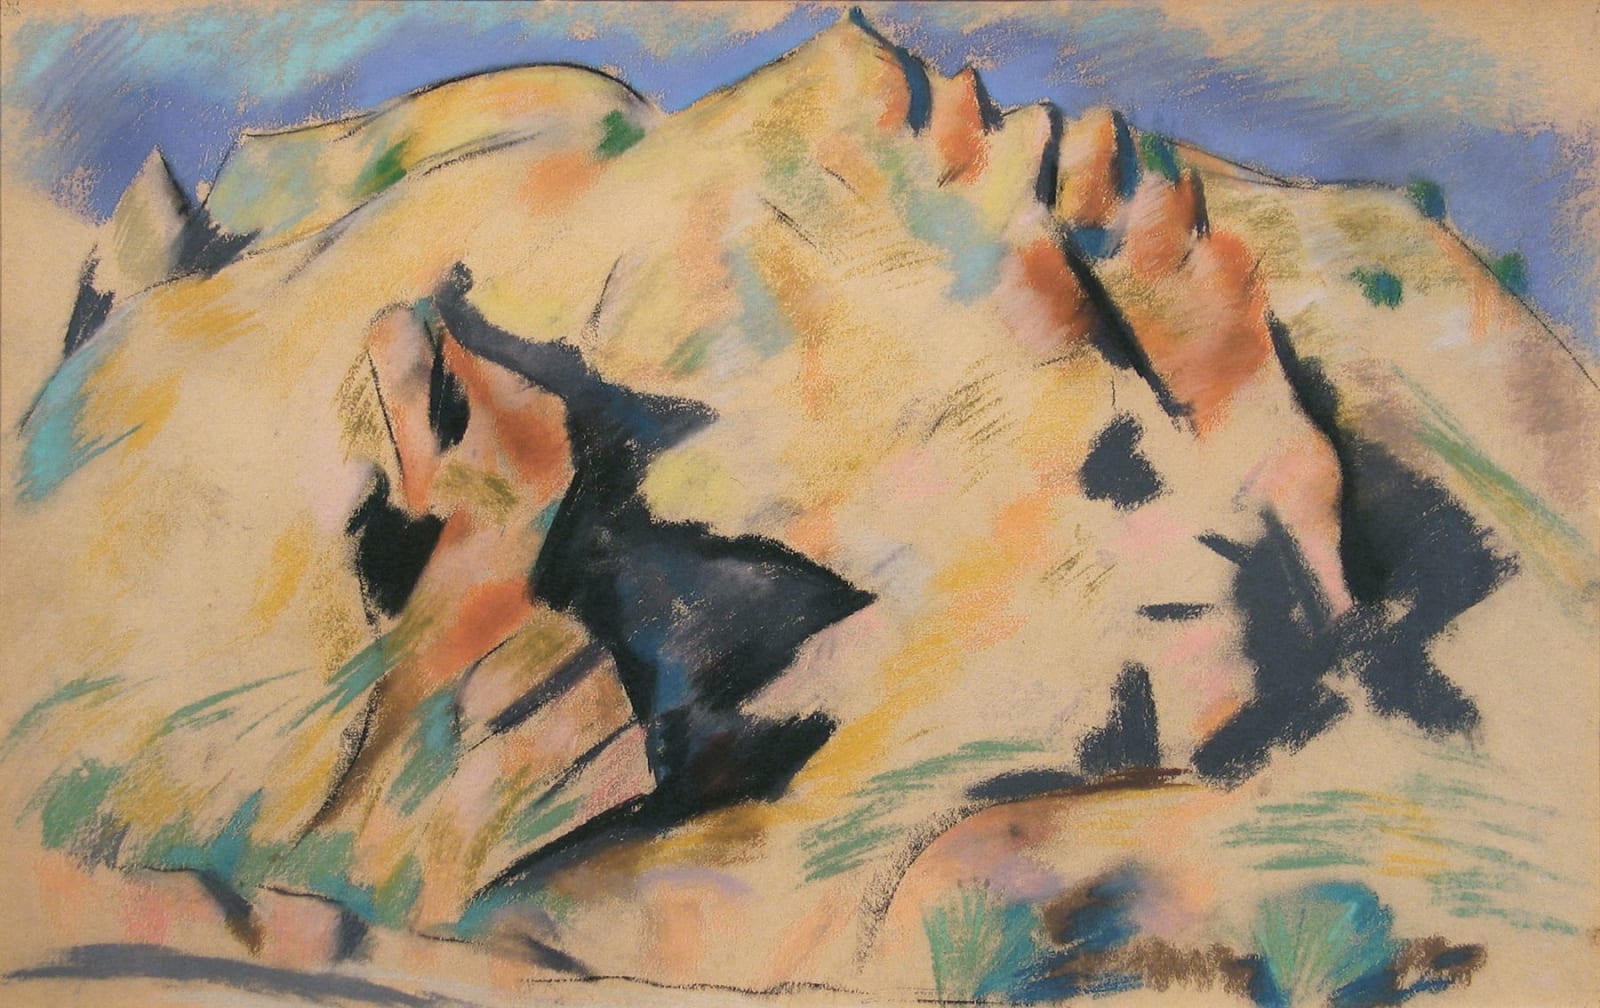 Marsden Hartley, New Mexico Landscape, 1918-19